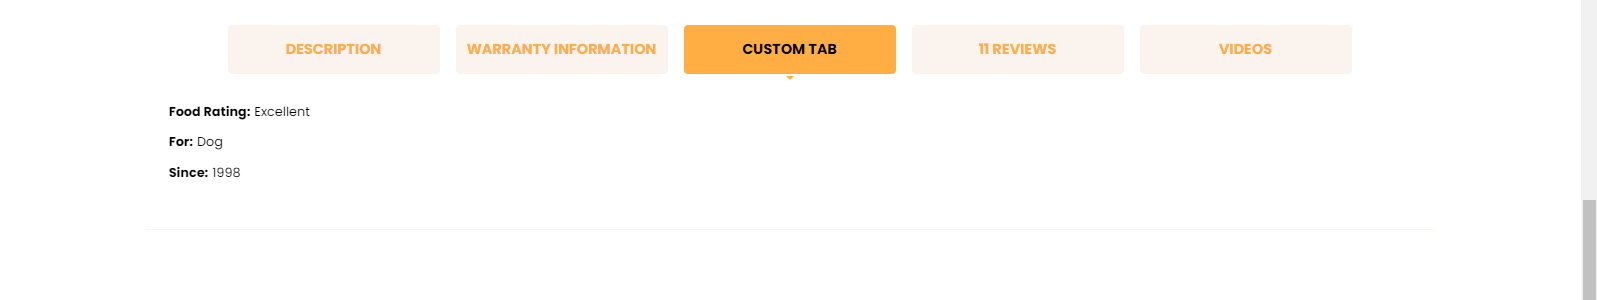 custom-tab